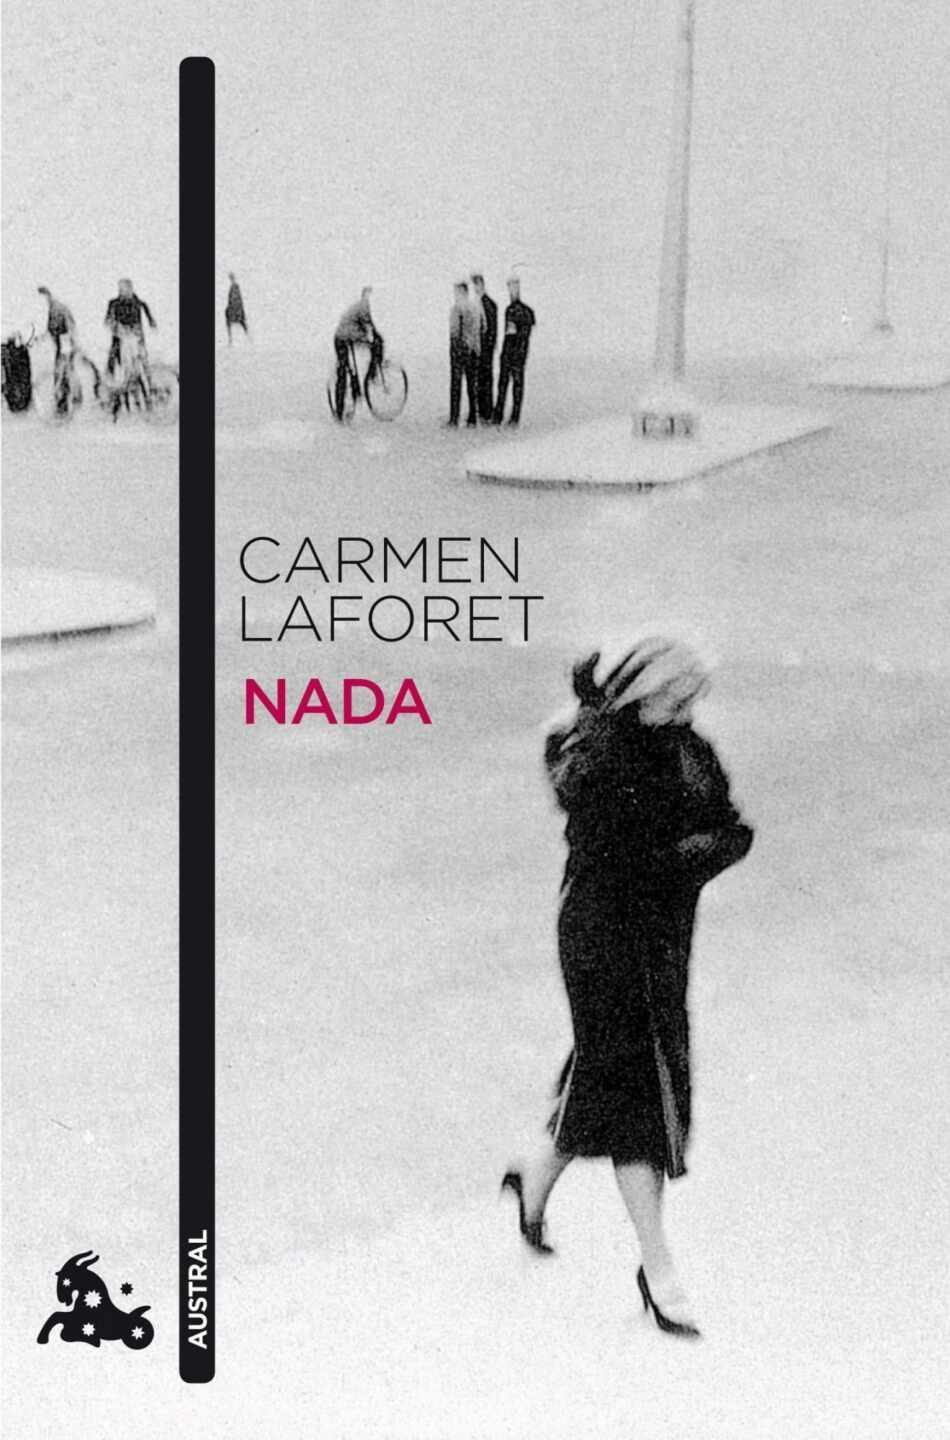 Portada del libro "Nada" de Carmen Laforet